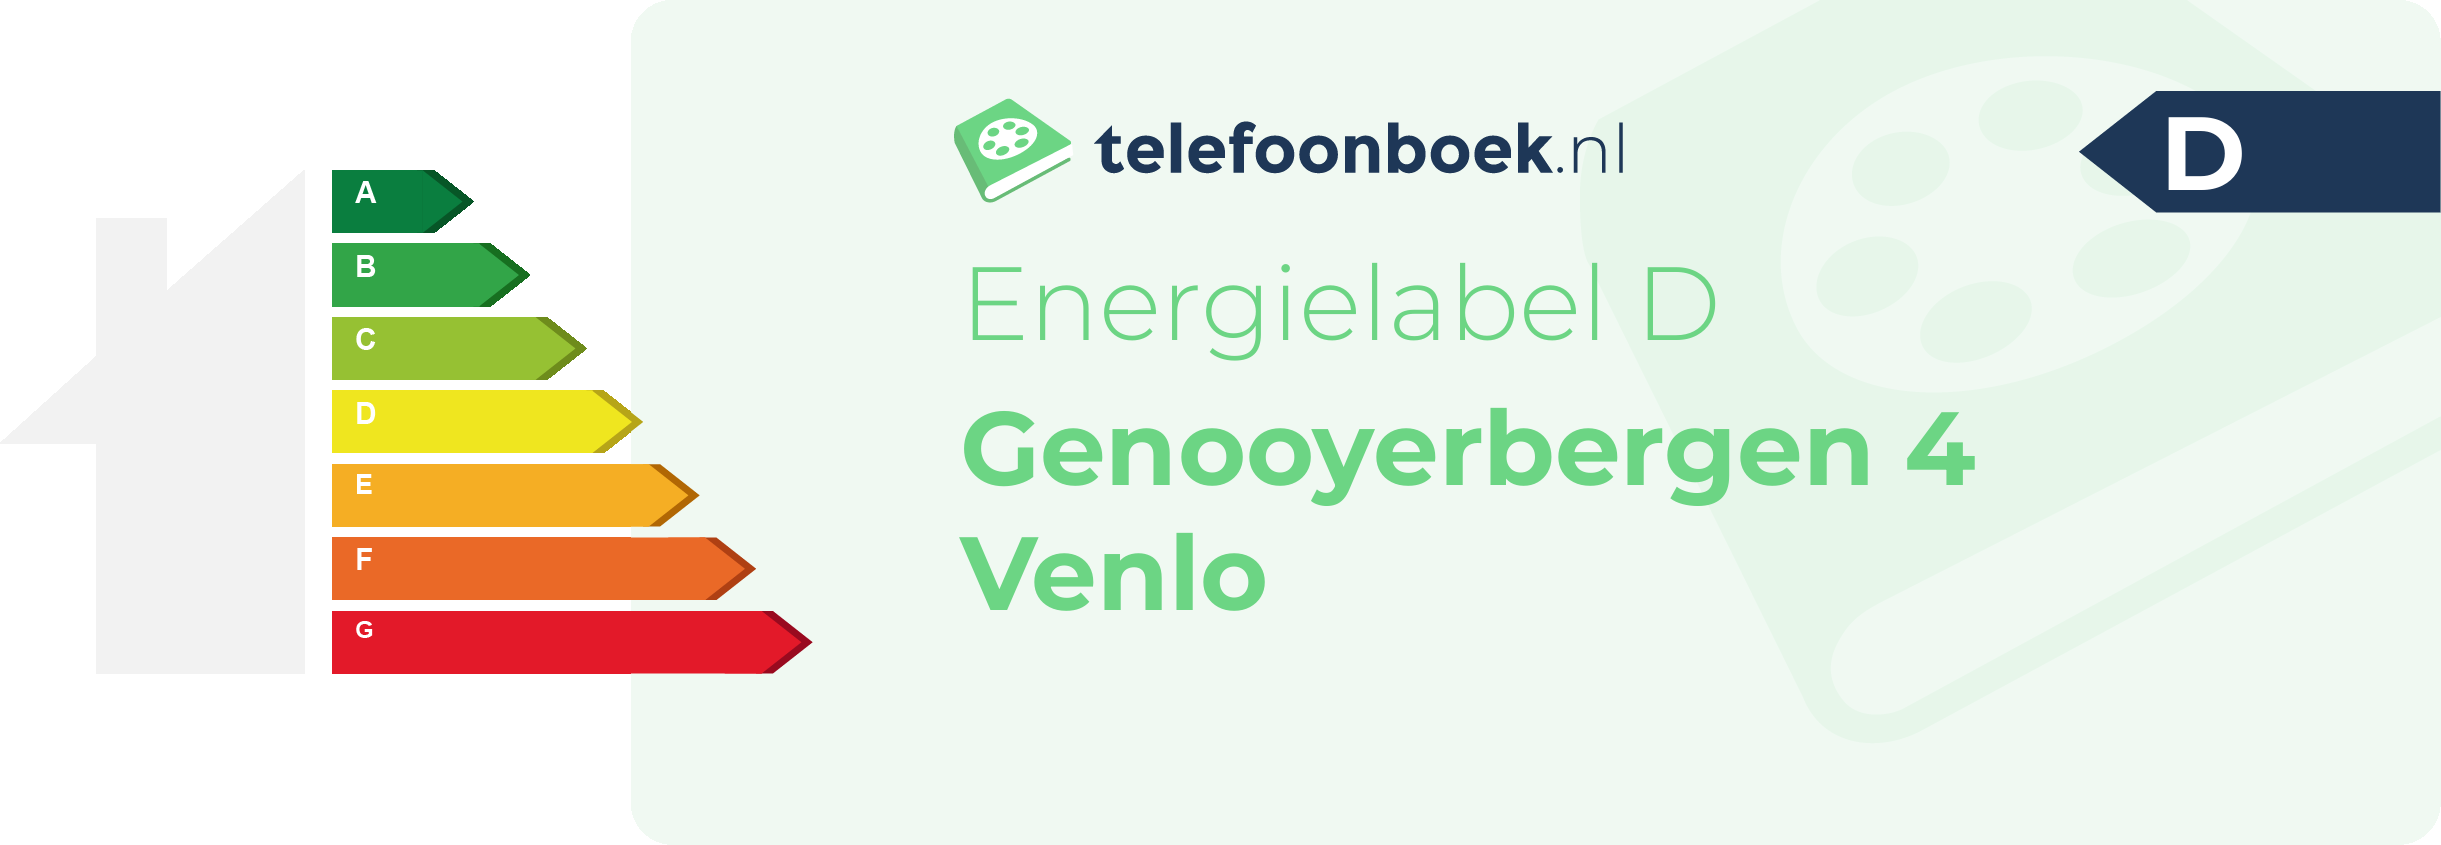 Energielabel Genooyerbergen 4 Venlo